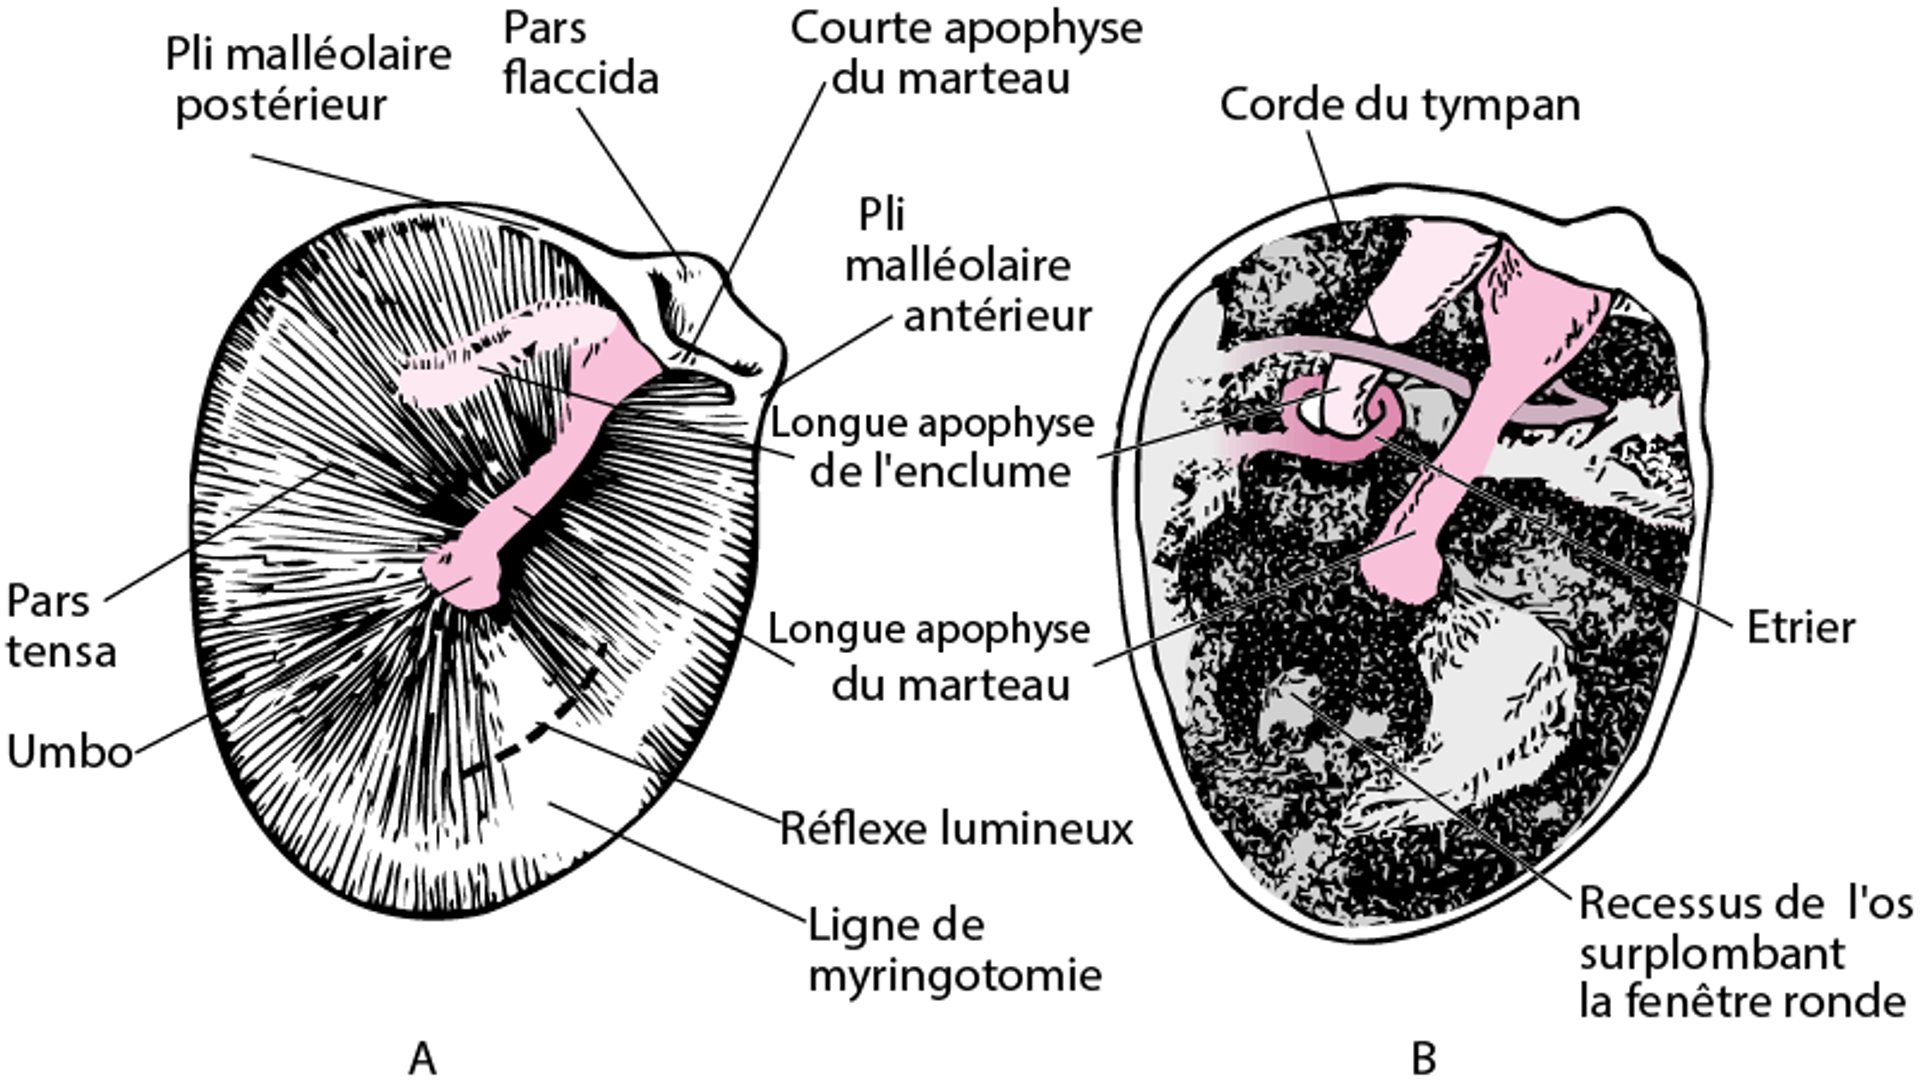 Tympan de l'oreille droite (A); caisse du tympan avec tympan retiré (B)